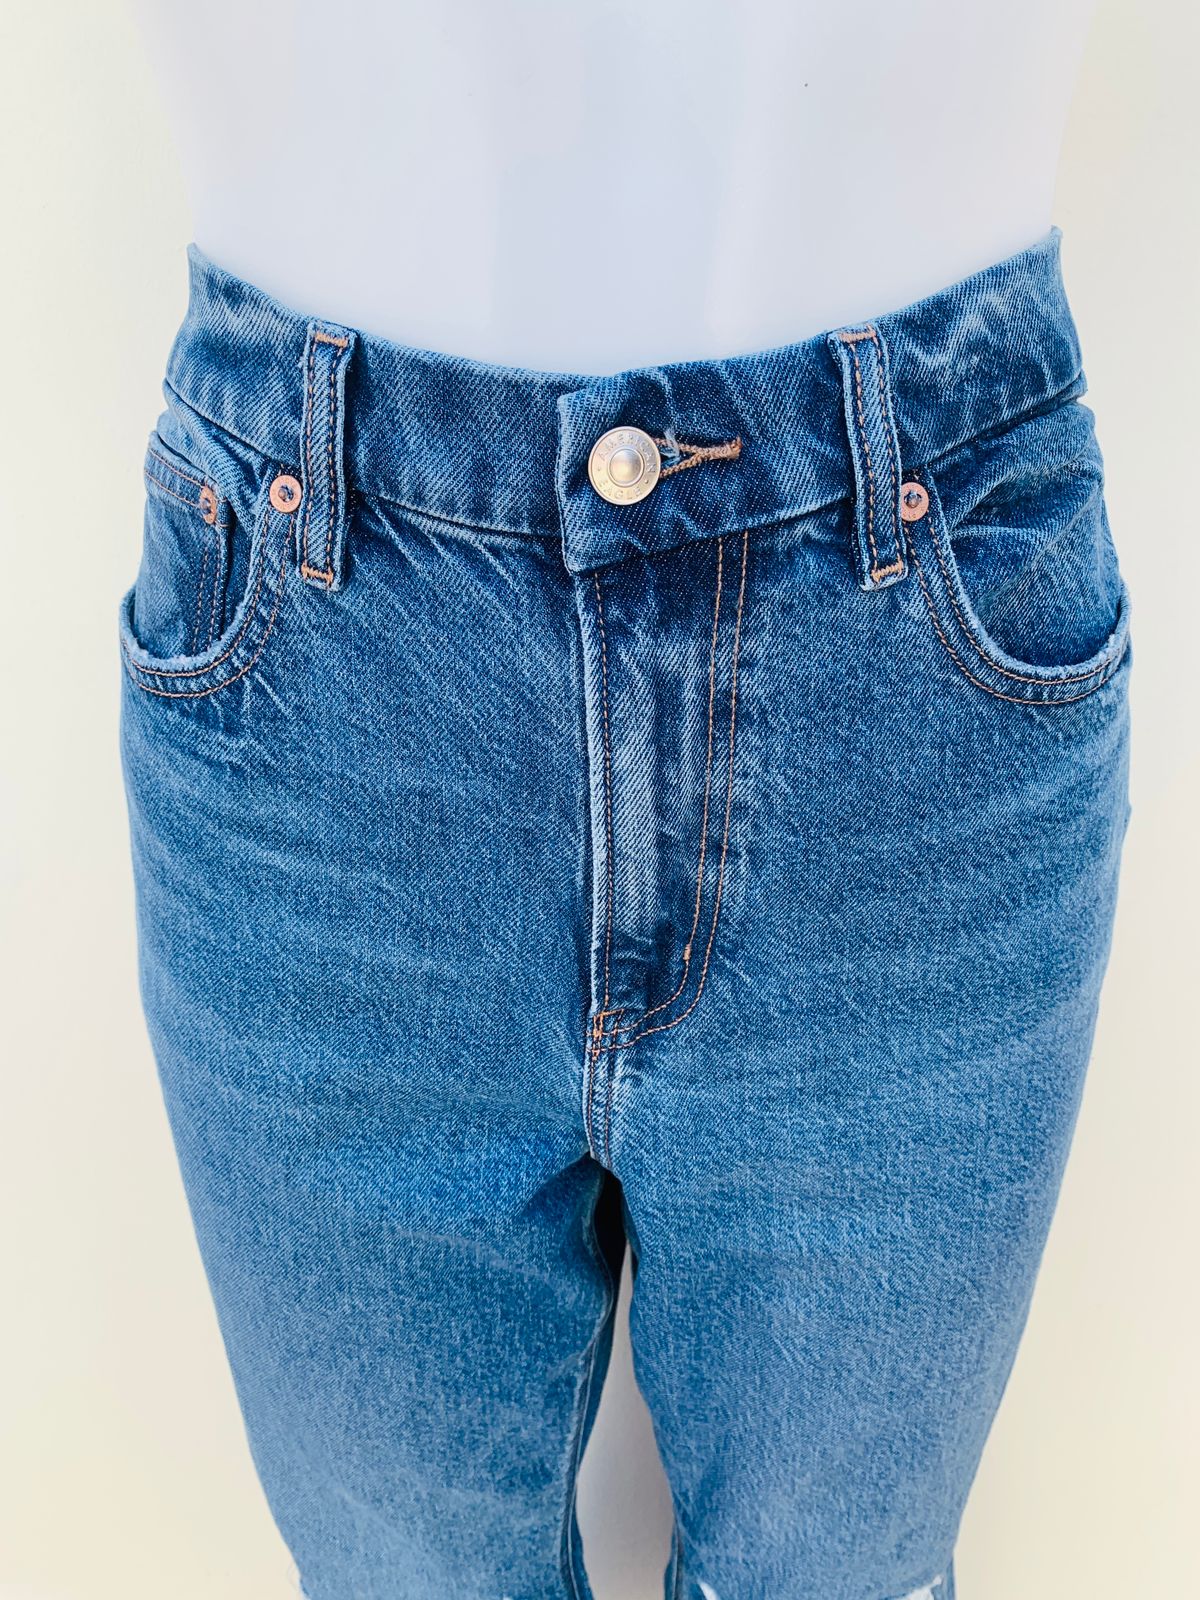 Pantalon jeans American Eagle original al azul con rasgados en las rodillas estilo campana STRETCH CURVY 90s BOOTCUT SHORT HIGH RISE